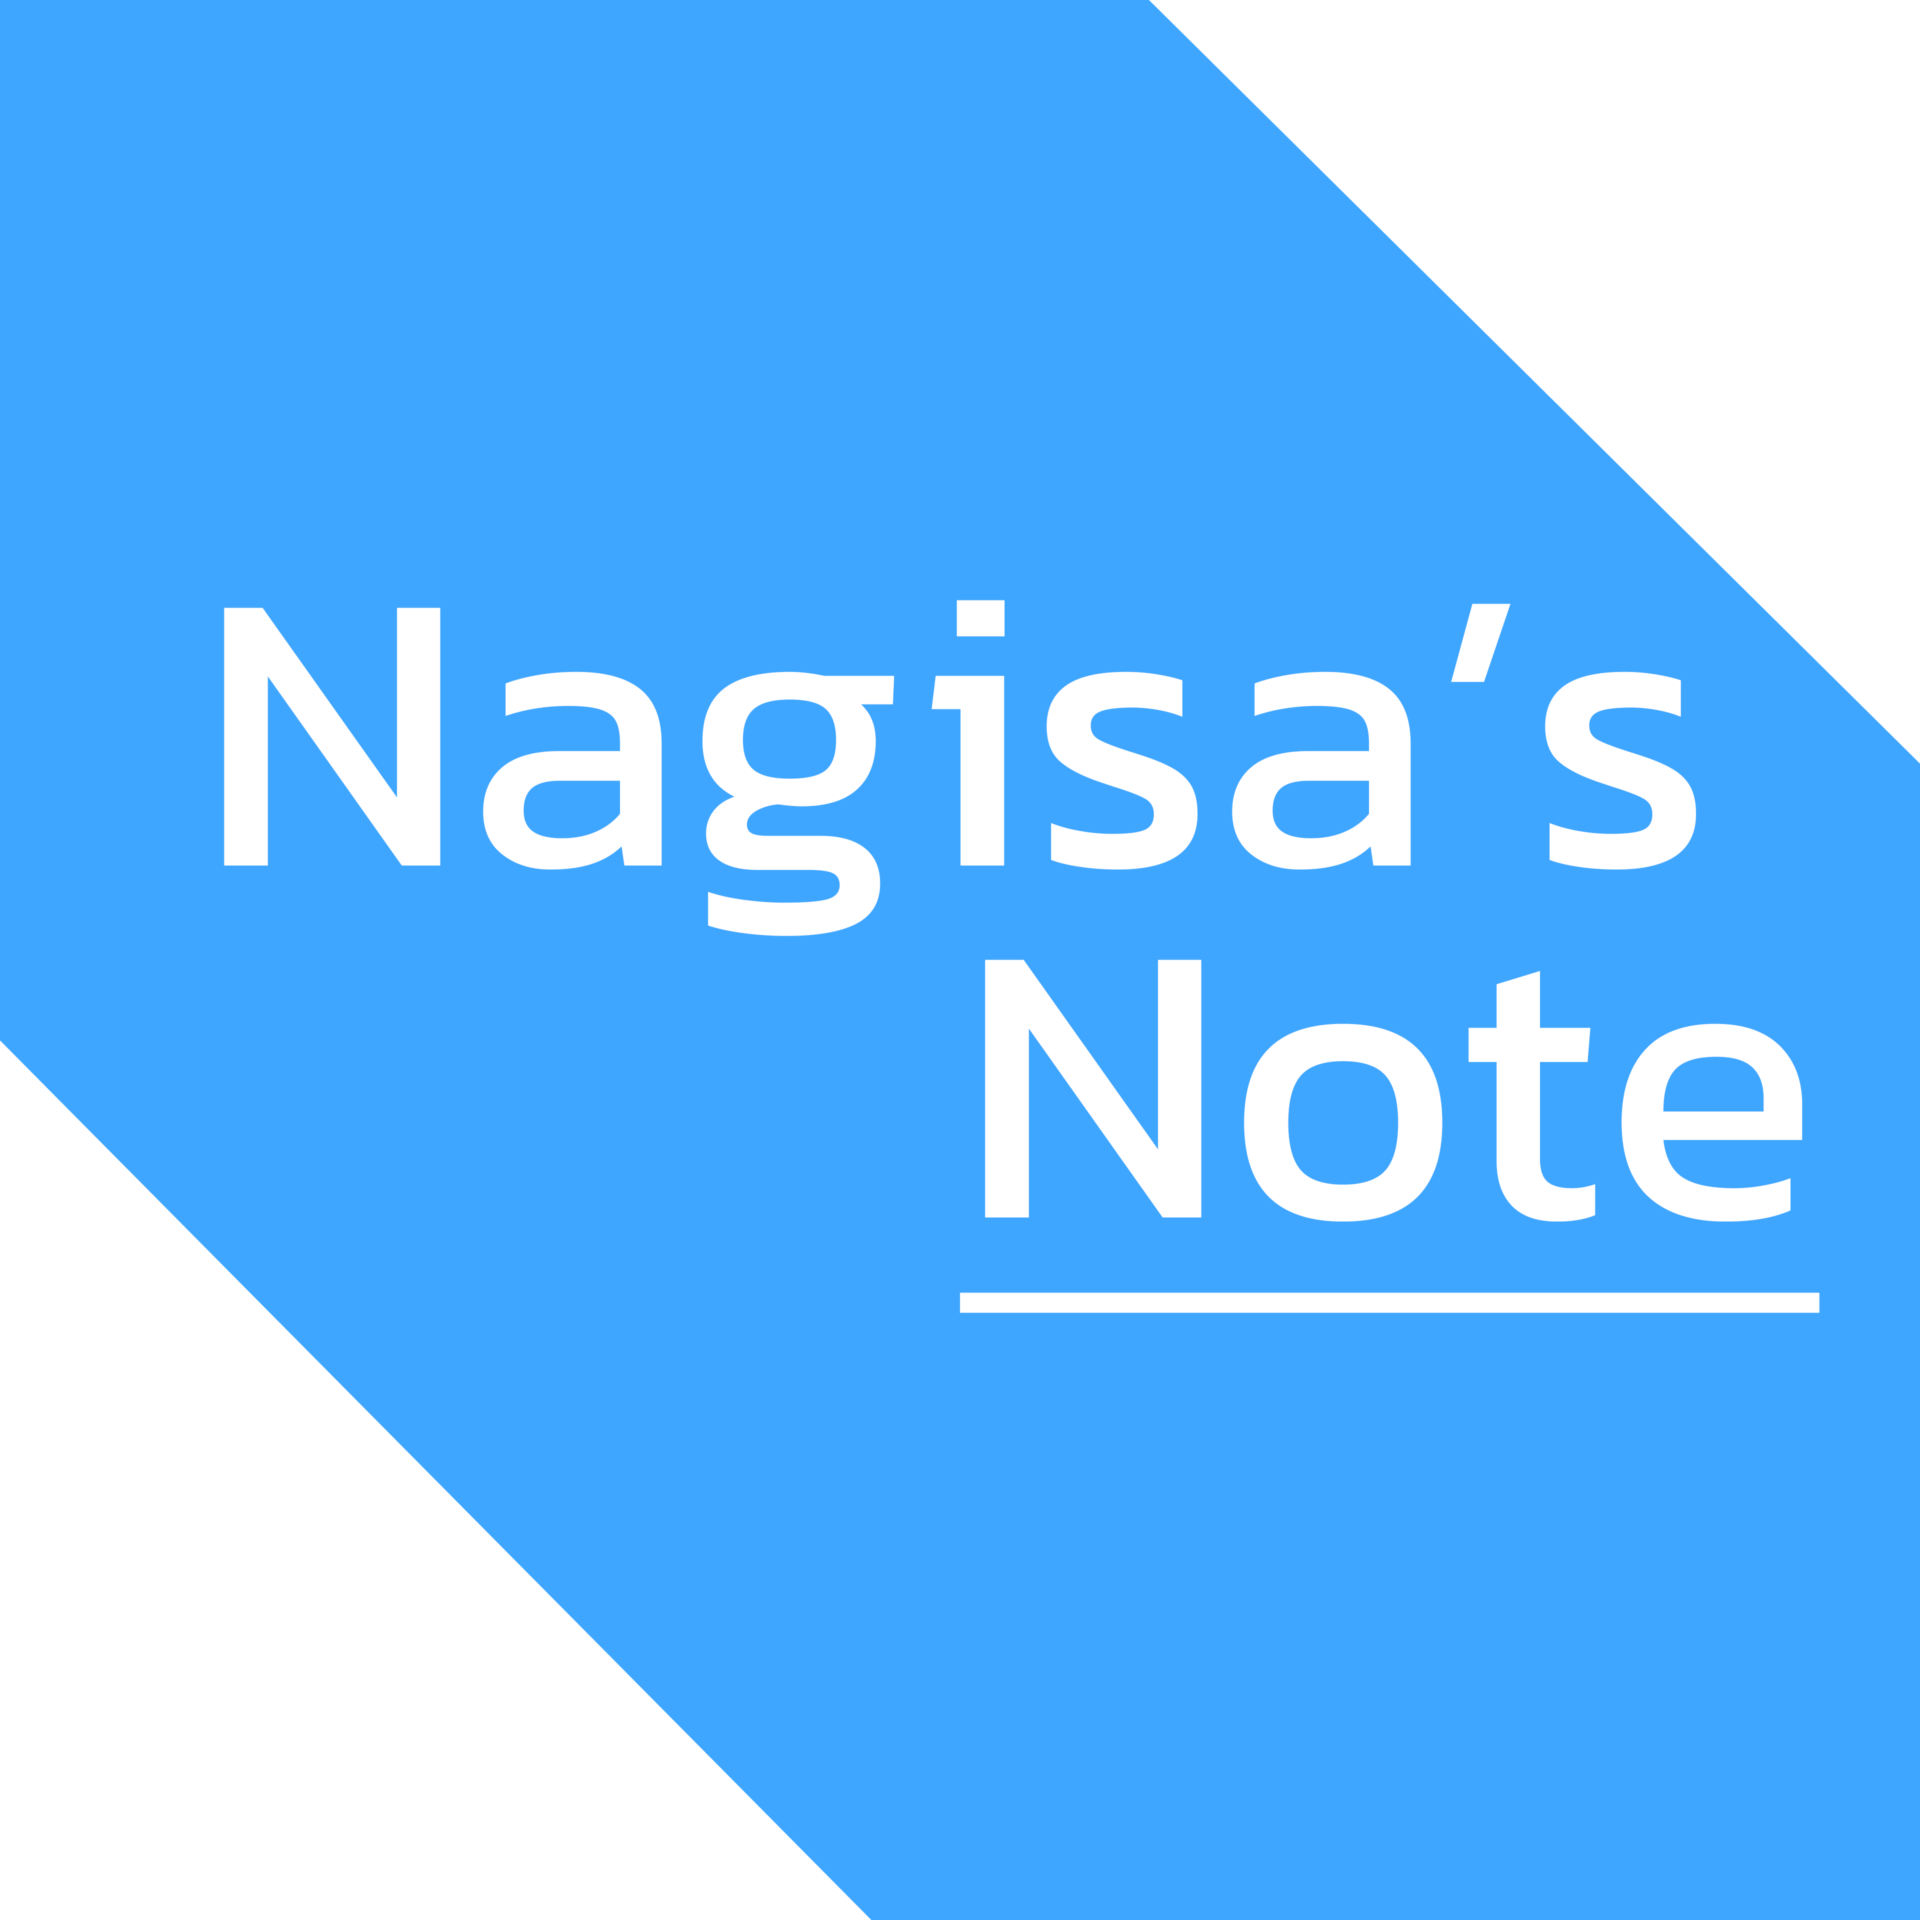 Nagisa's Note